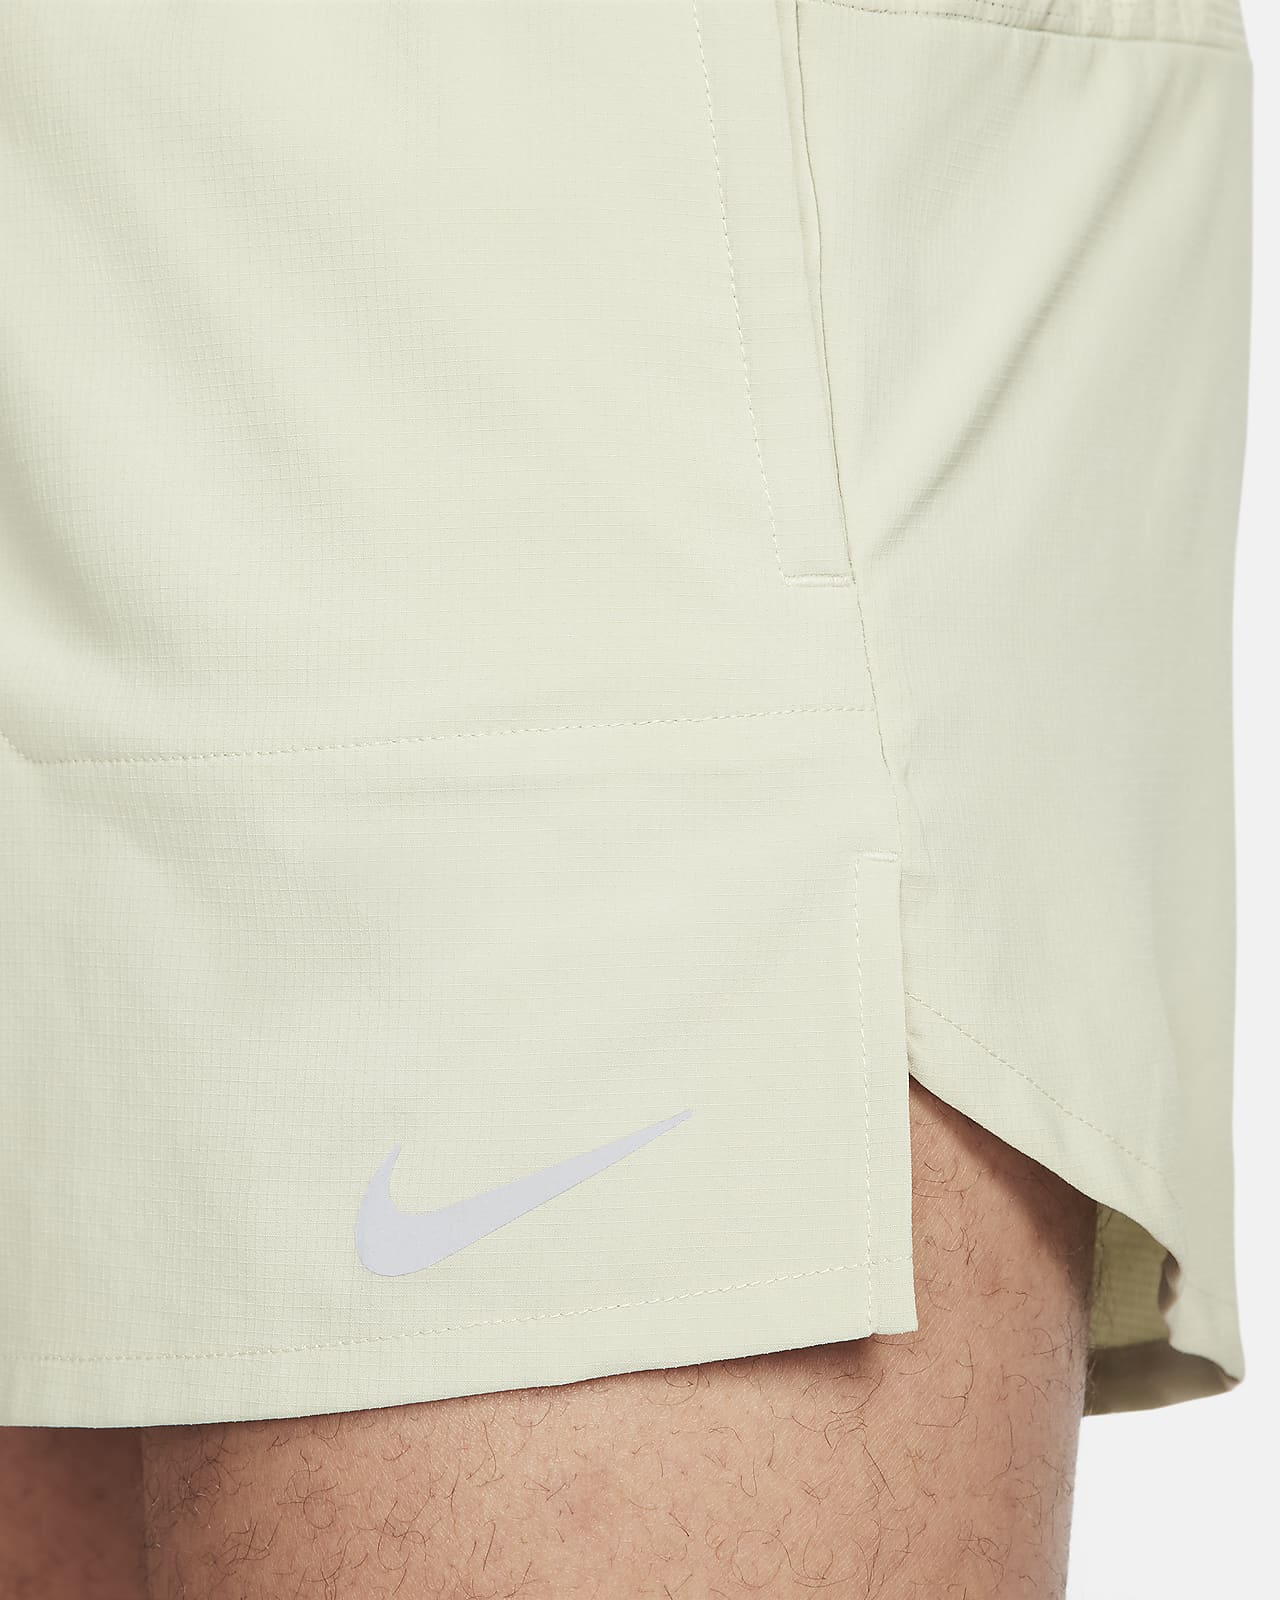 Nike Dri-FIT Flex Stride Men's 5 Brief-Lined Trail Running Shorts, Olive  Grey / Lt Iron Ore / Celestine Blue, Medium : : Clothing, Shoes &  Accessories